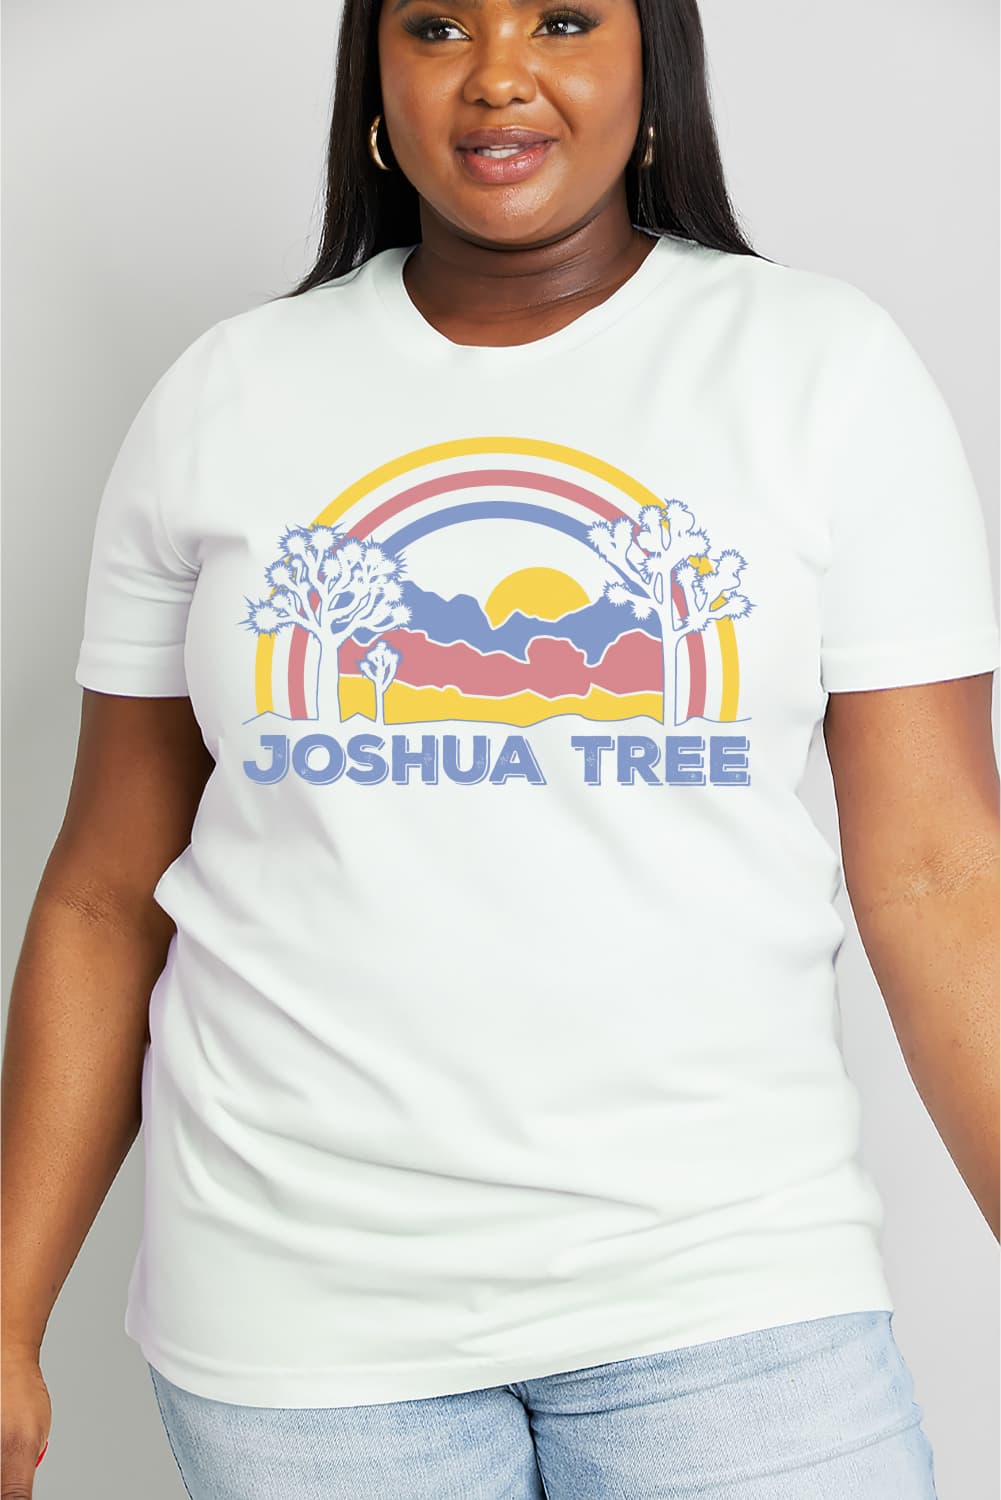 Simply Love JOSHUA TREE Graphic Cotton Tee